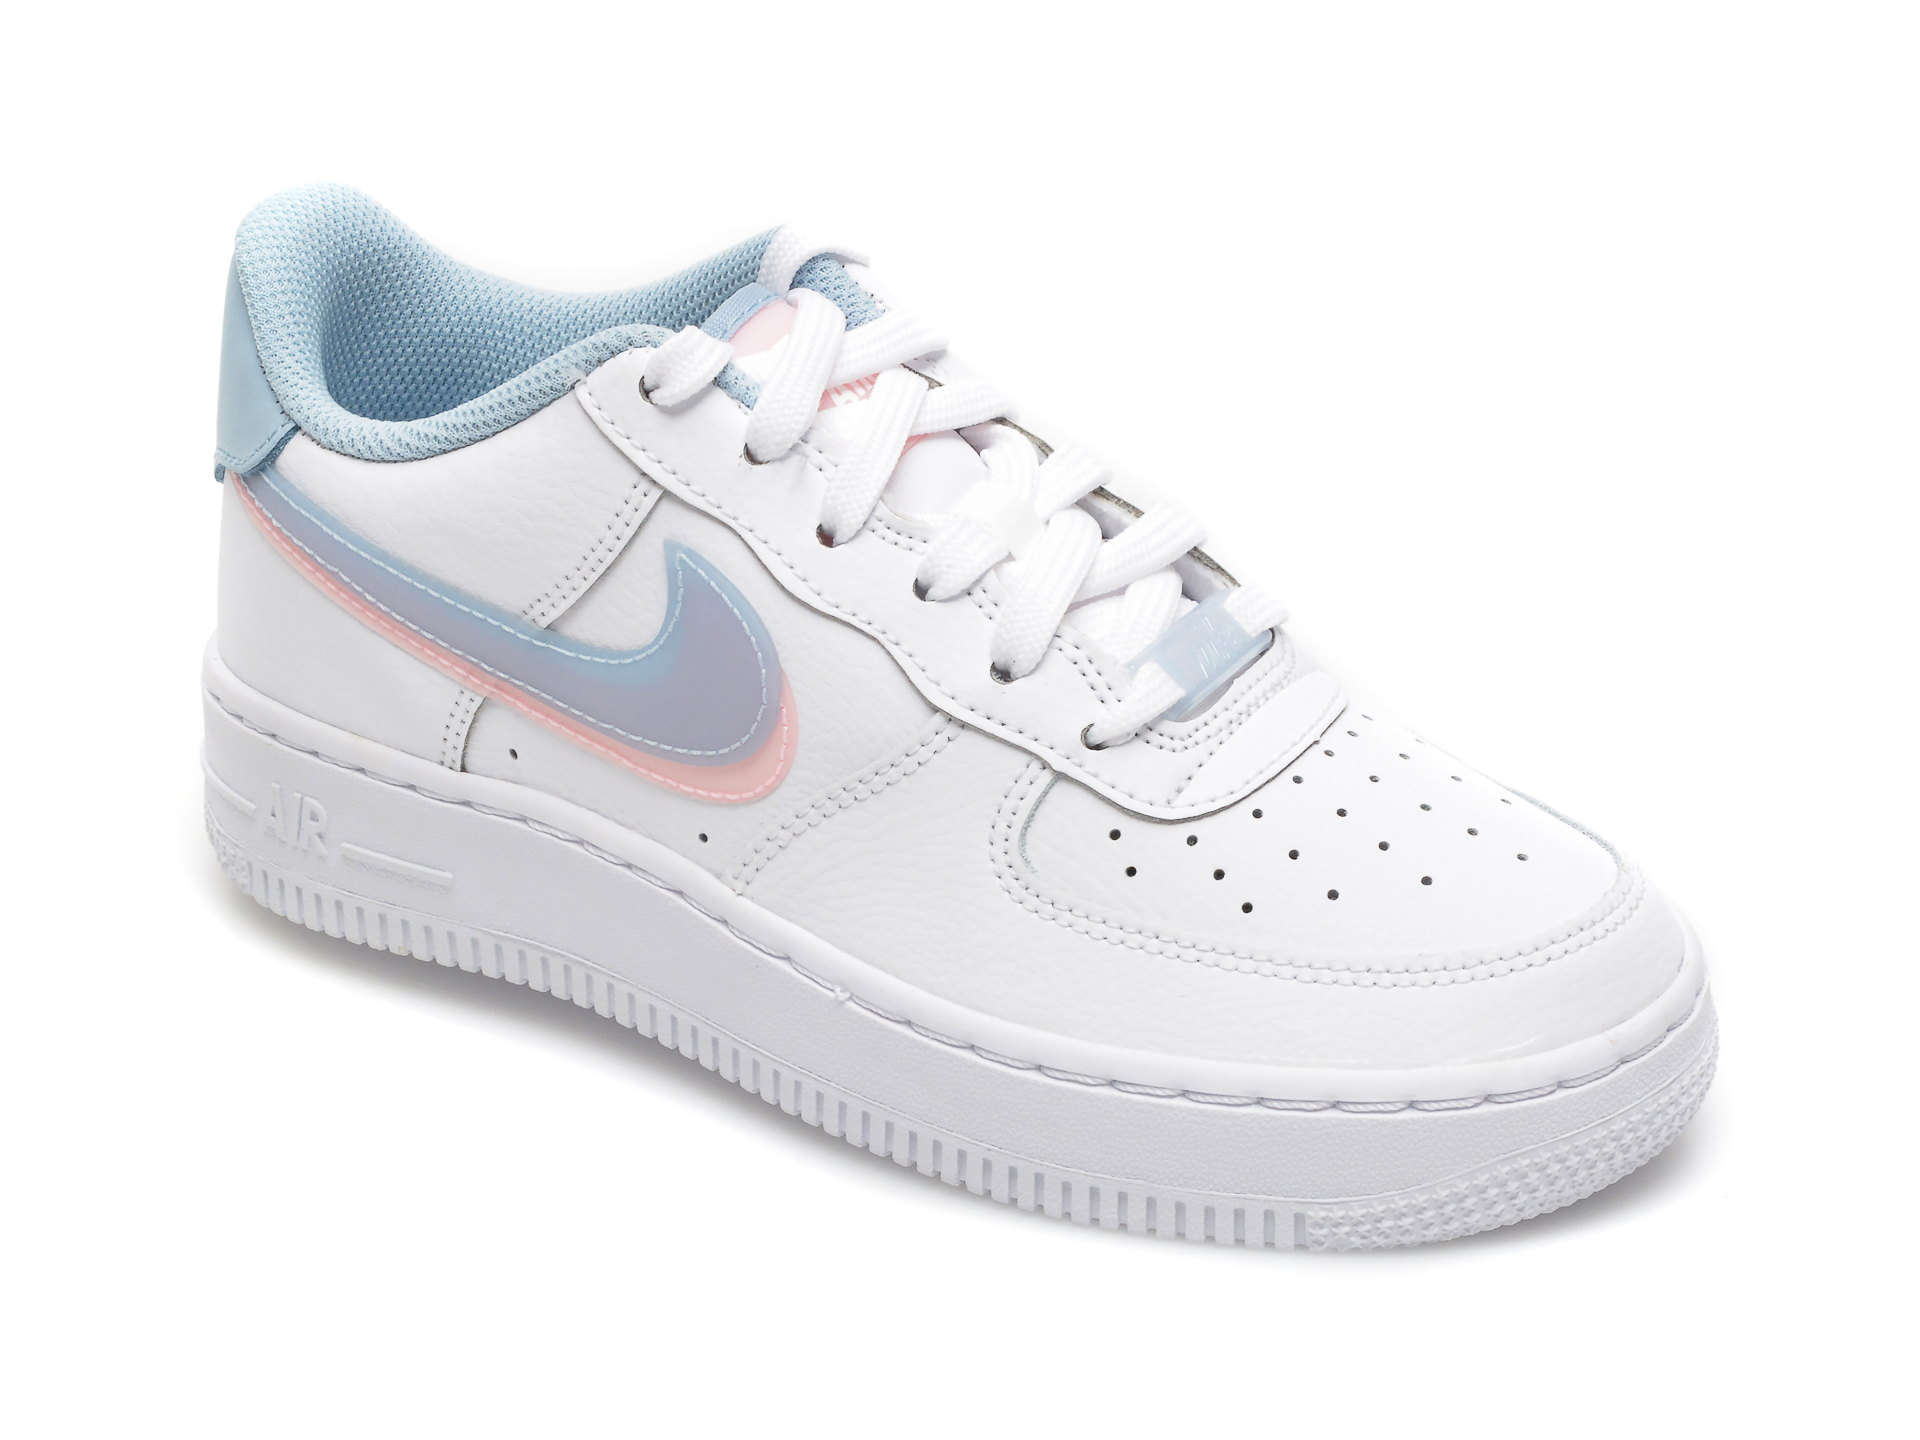 Pantofi sport NIKE albi, Air Force 1 Lv8 (Gs), din piele naturala imagine otter.ro